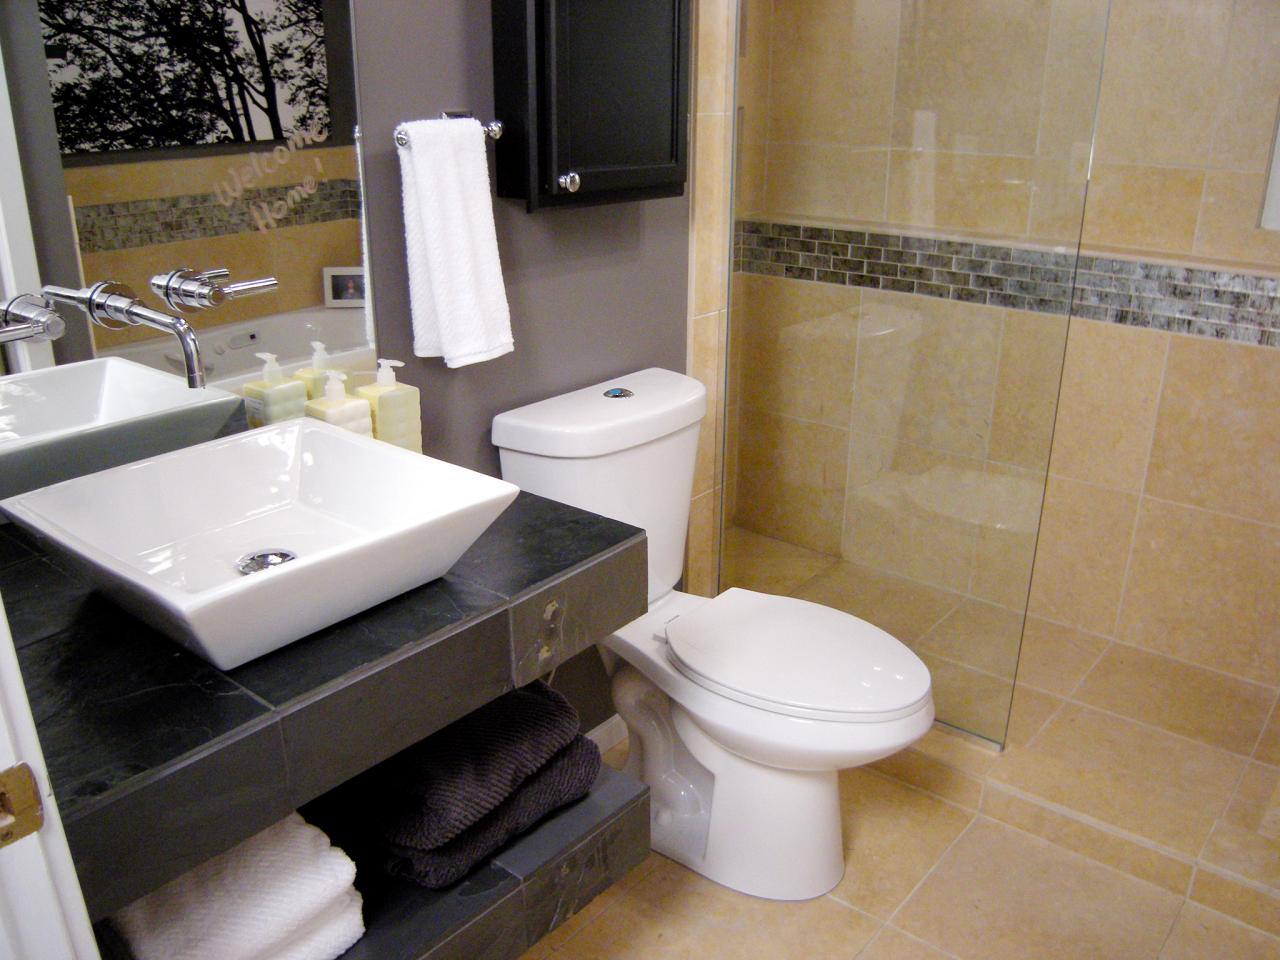 22 Inch Bathroom Vanity With Travertine Vessel Sink